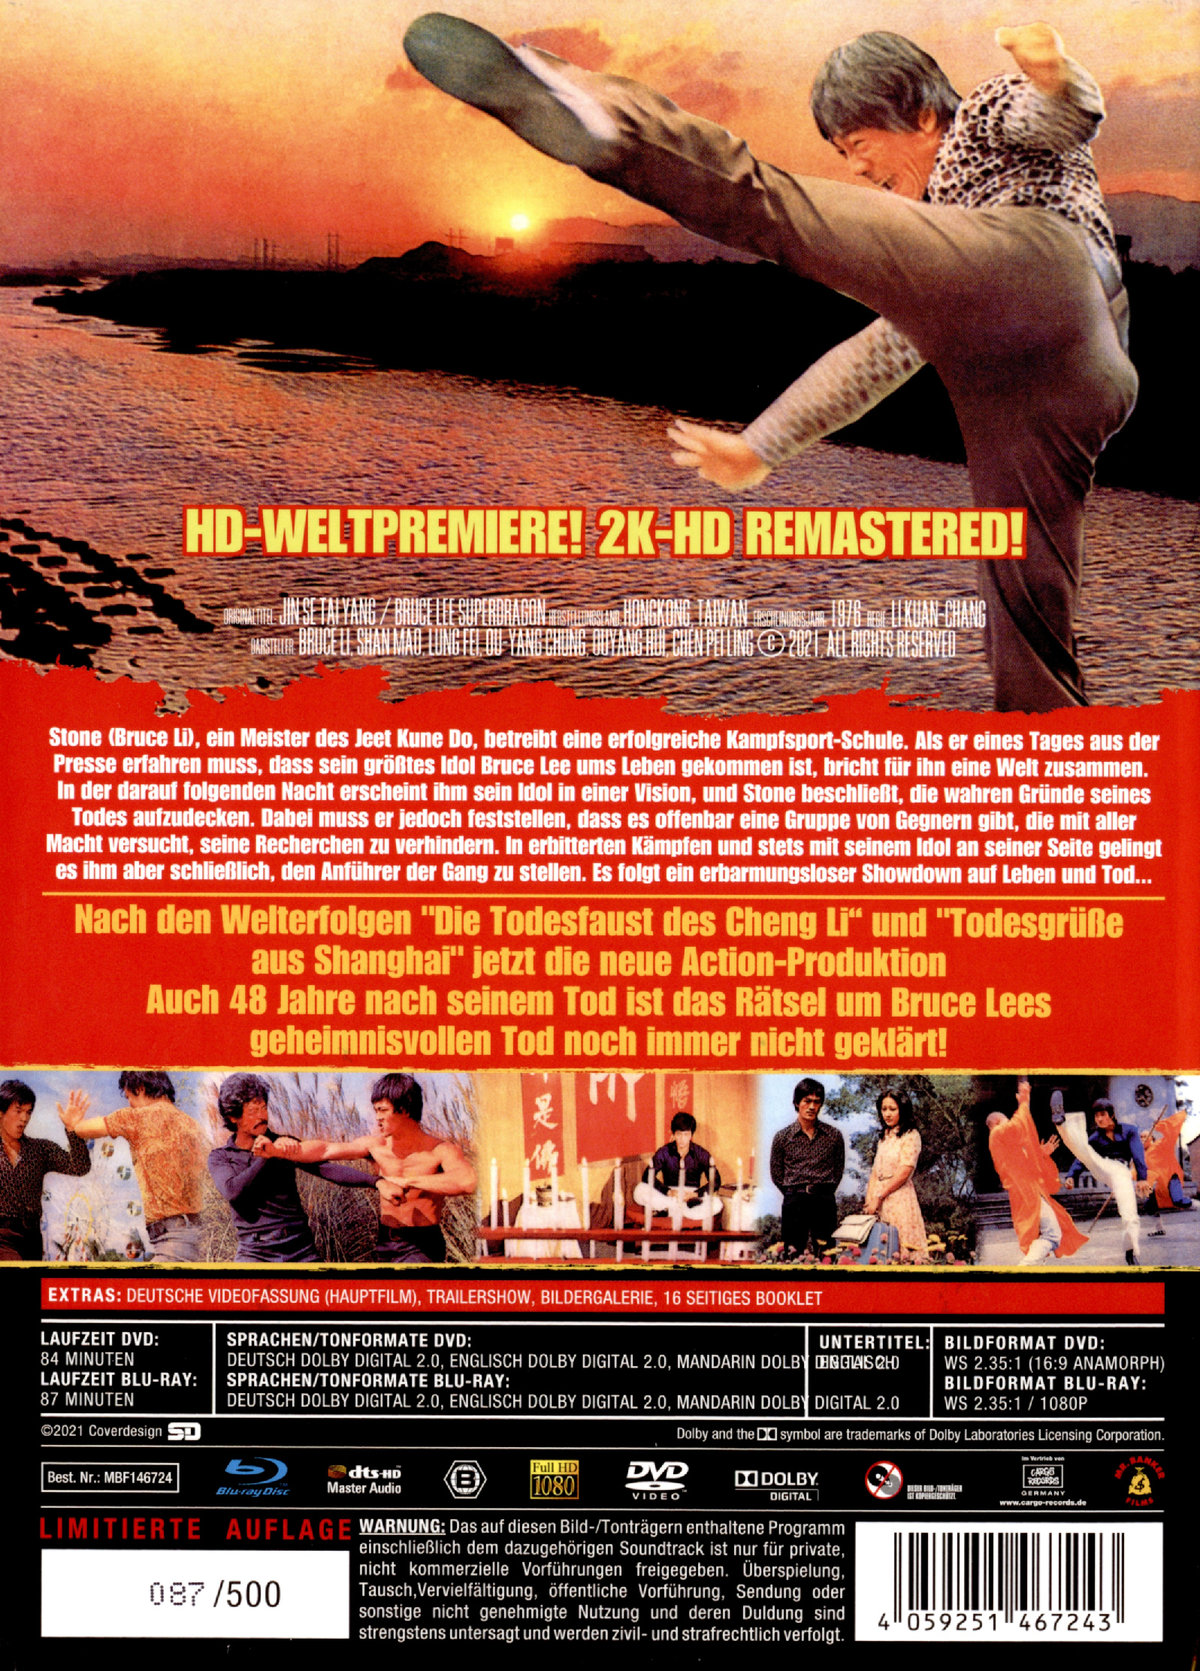 King of Karate Bruce Lee, The - Er bleibt der Grösste - Uncut Mediabook Edition (DVD+blu-ray) (B)